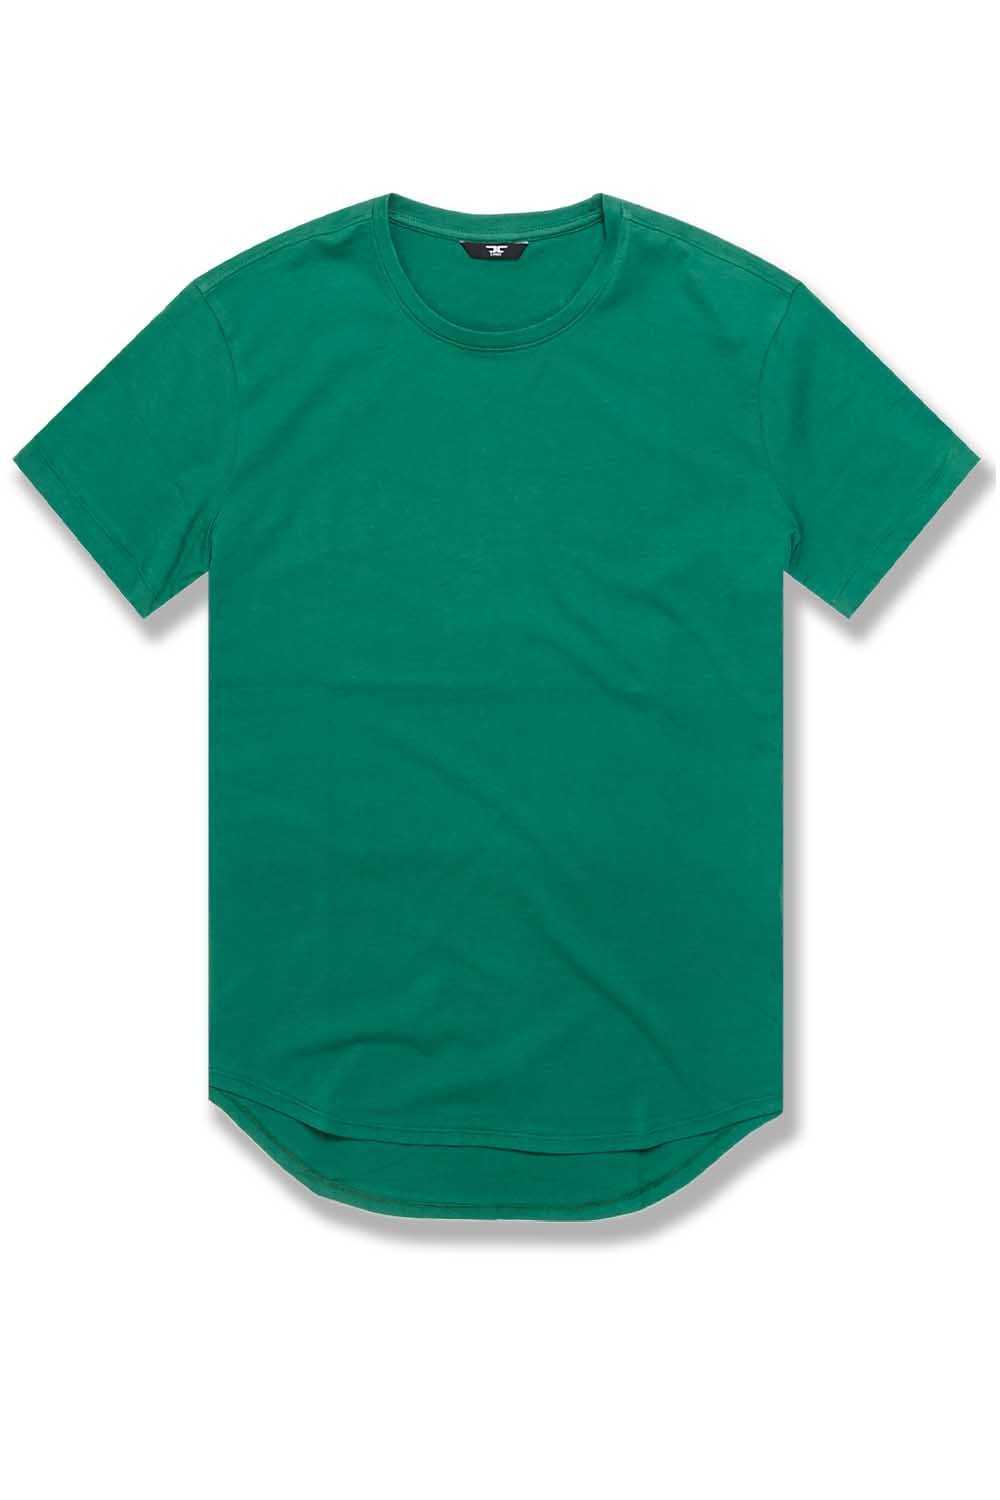 JC Big Men Big Men's Scallop T-Shirt (Name Your Price) Ivy Green / 4XL